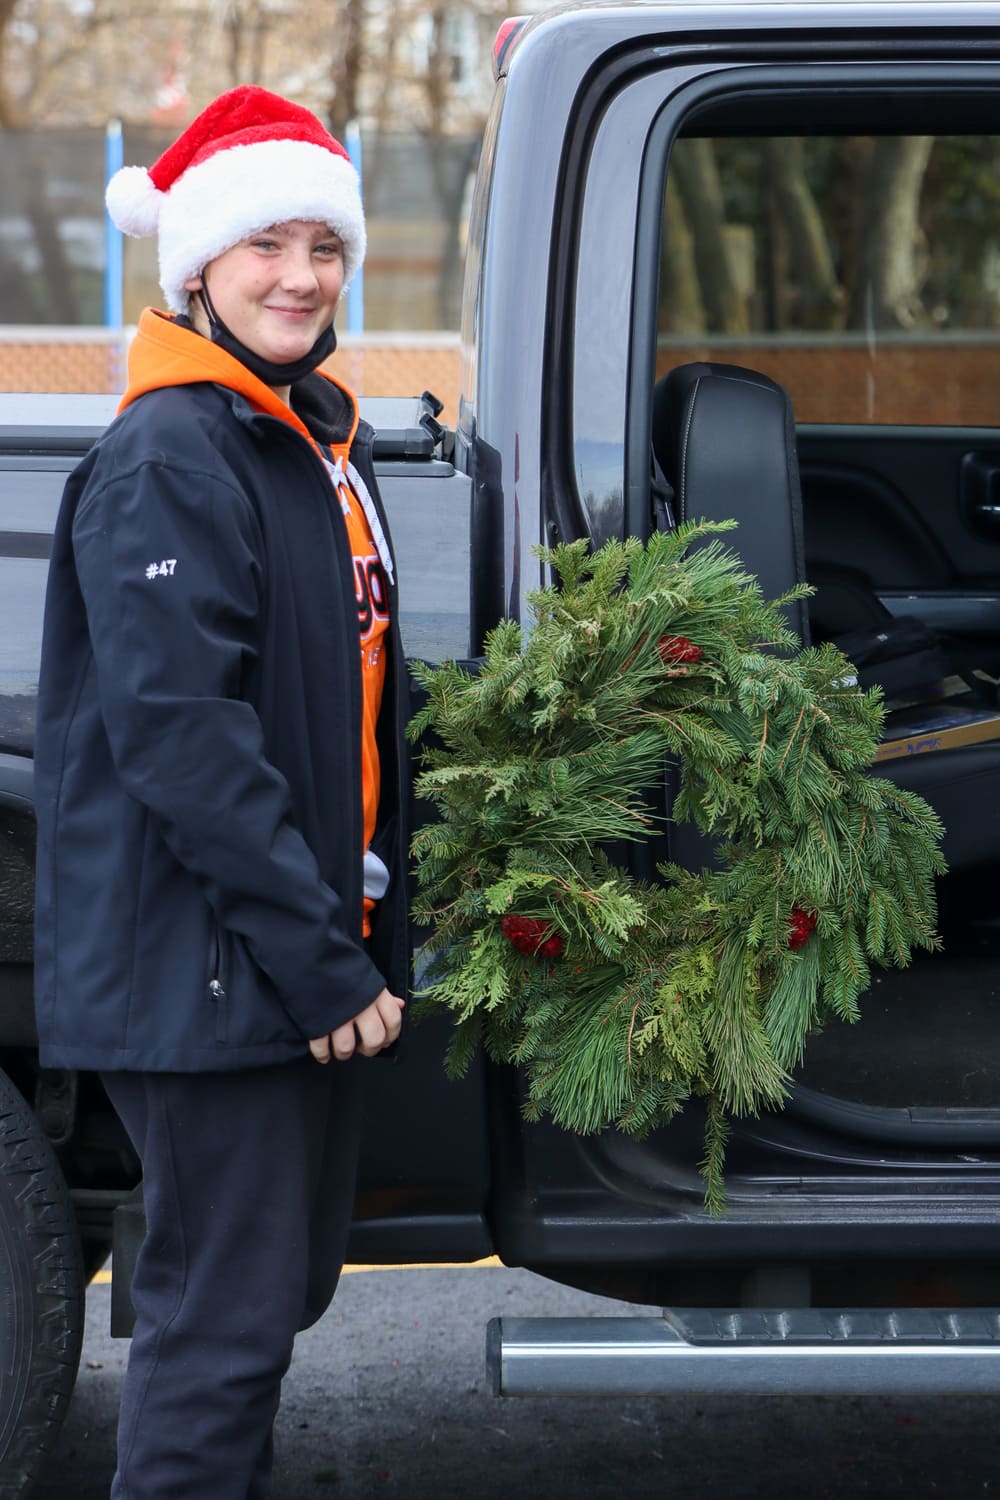 Volunteer Nolan brings holiday cheer to the fundraiser